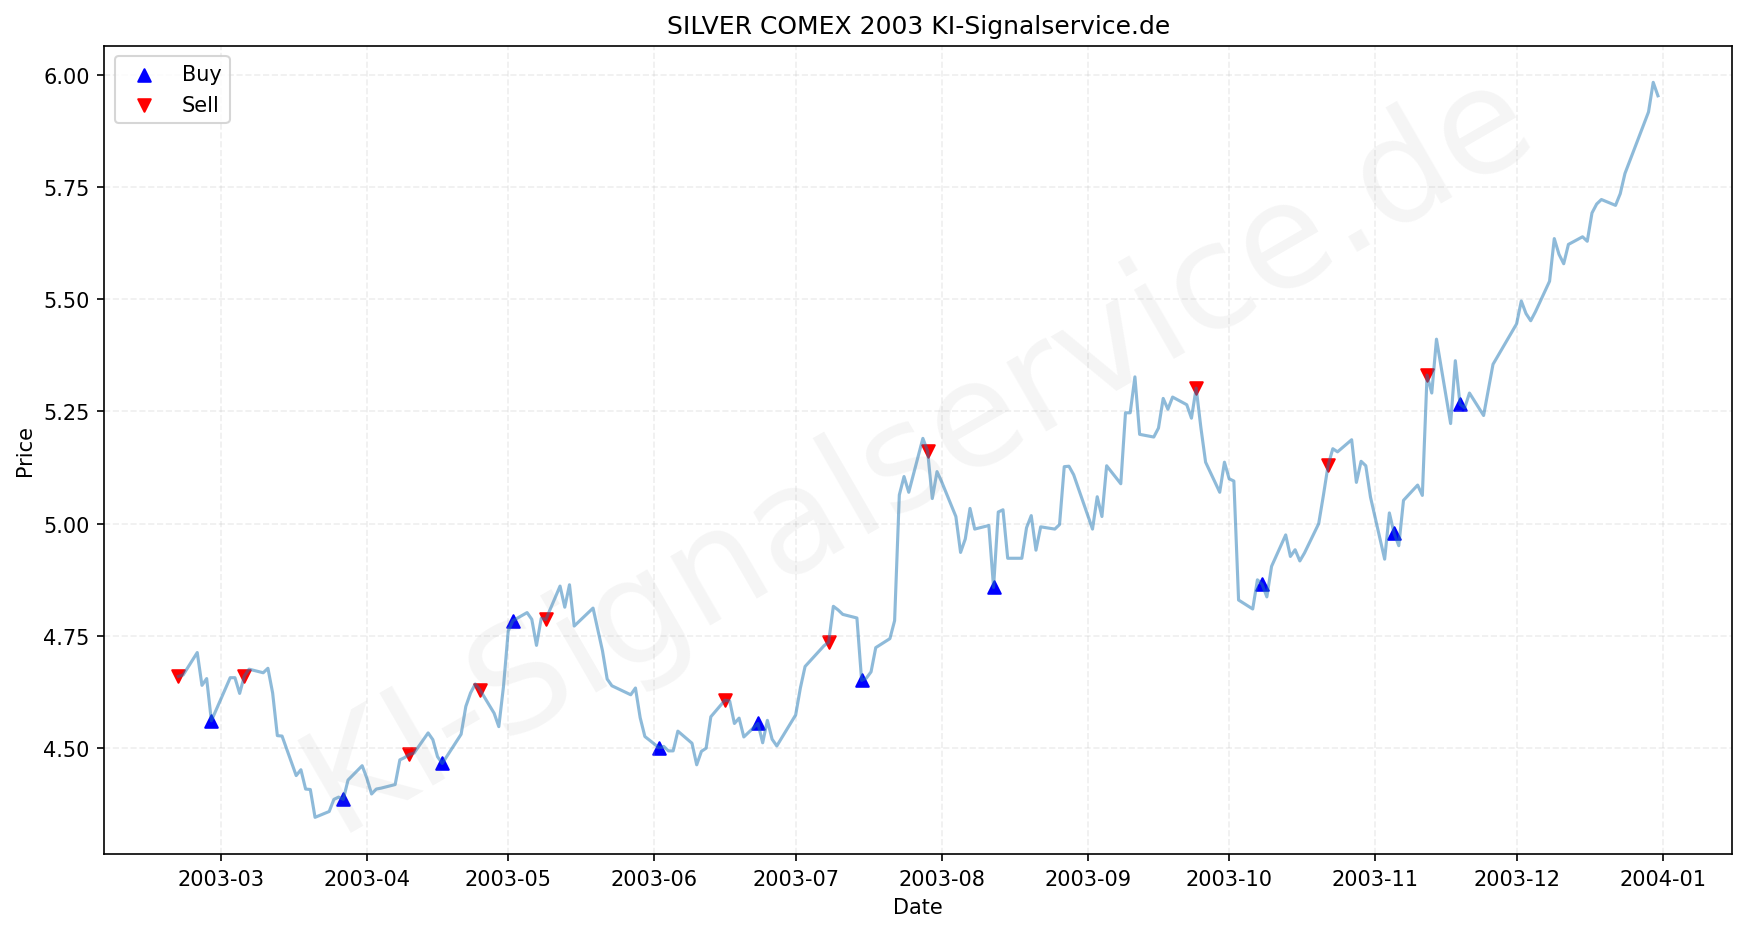 Silver Chart - KI Tradingsignale 2003